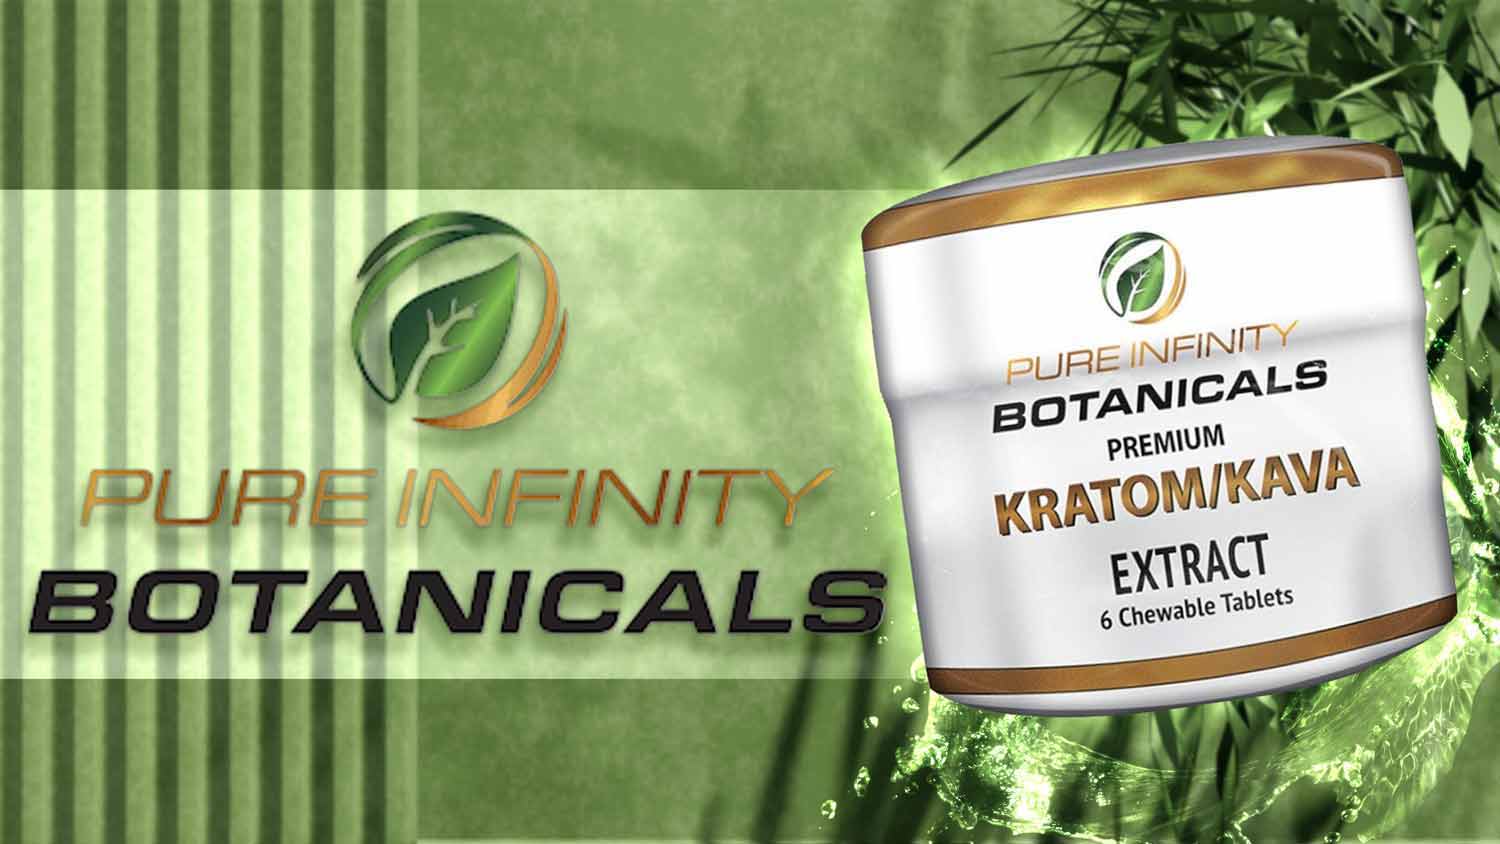 Pure Infinity Botanicals Kratom/Kava Extract 6 Tablets